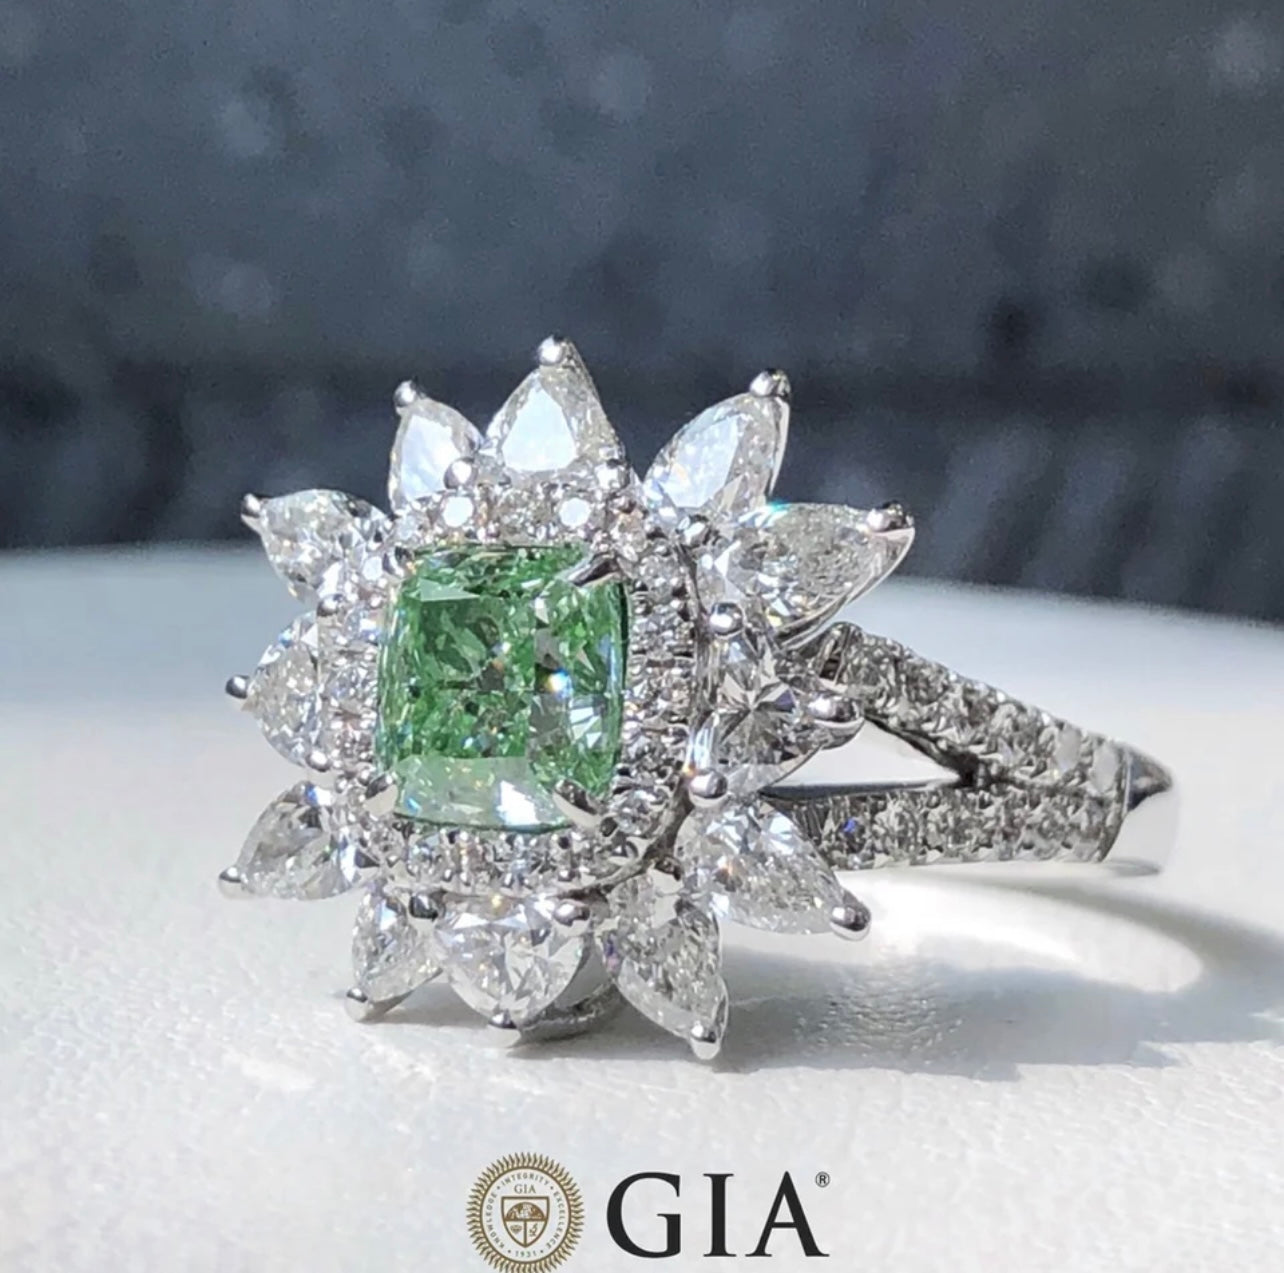 SOLD ••• GIA Certified 2.00 Carat Fancy Vivid Green Brilliant Cushion Cut Diamond Very Rare and Elegant very Beautiful